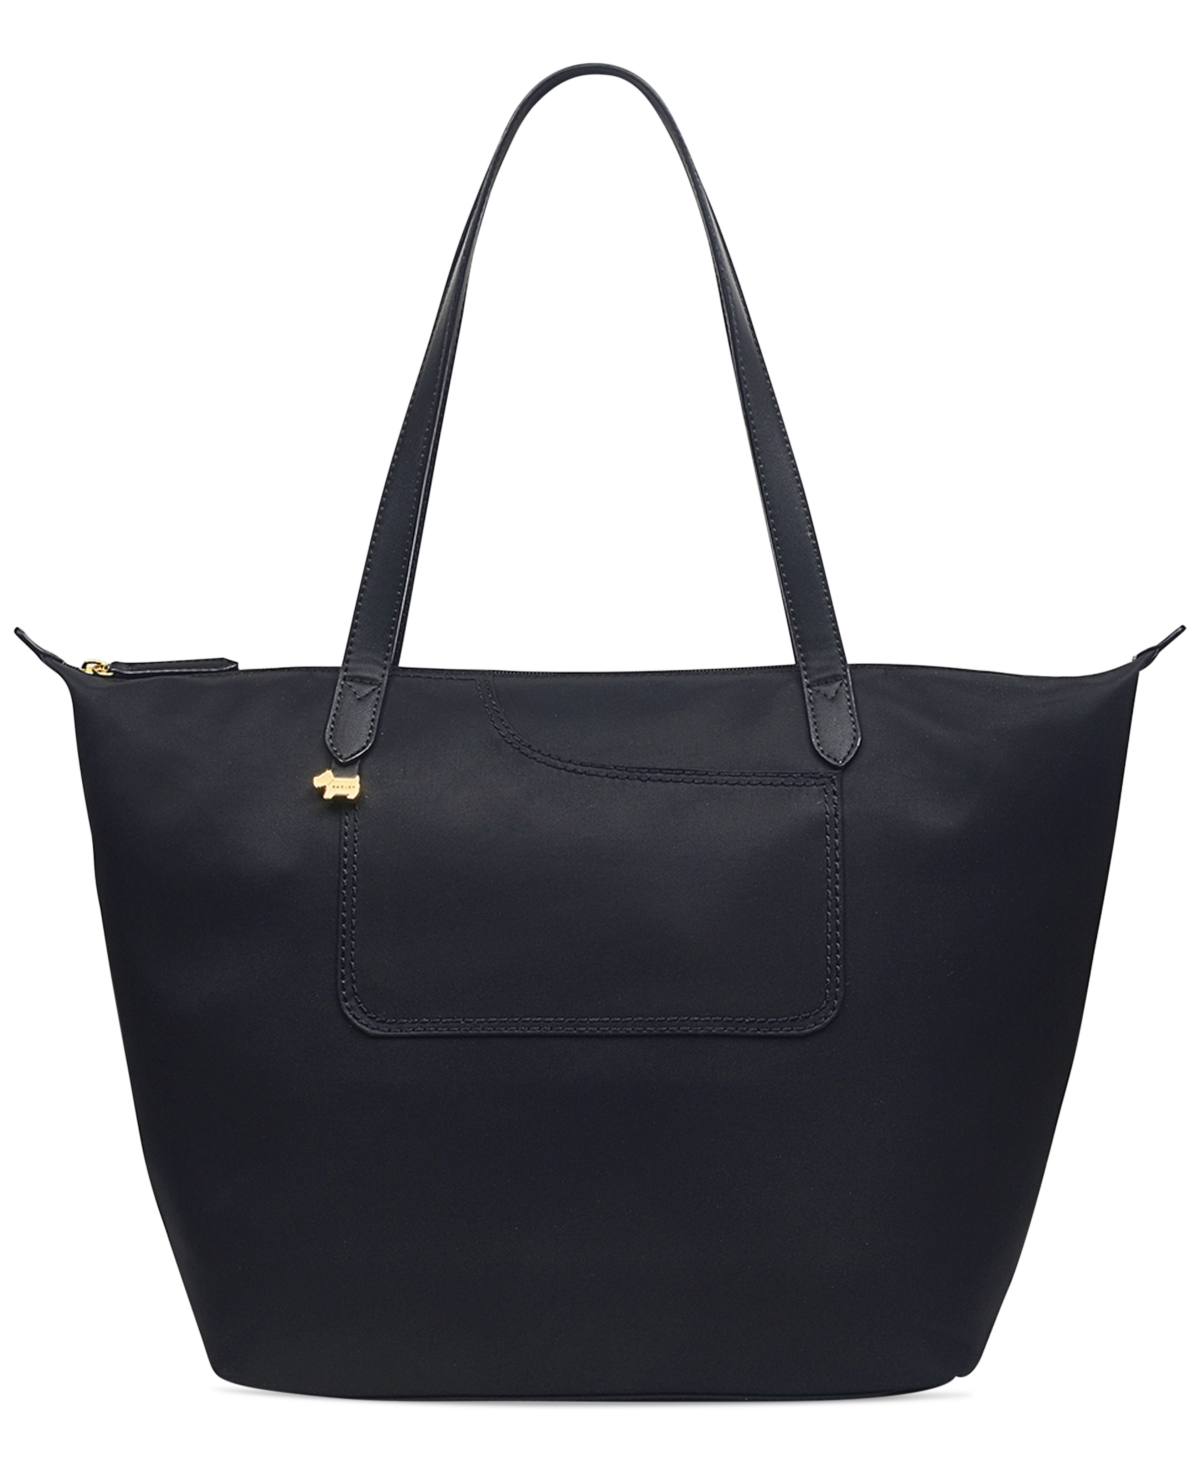 Women's Pockets Essentials Large Ziptop Tote Bag - Black